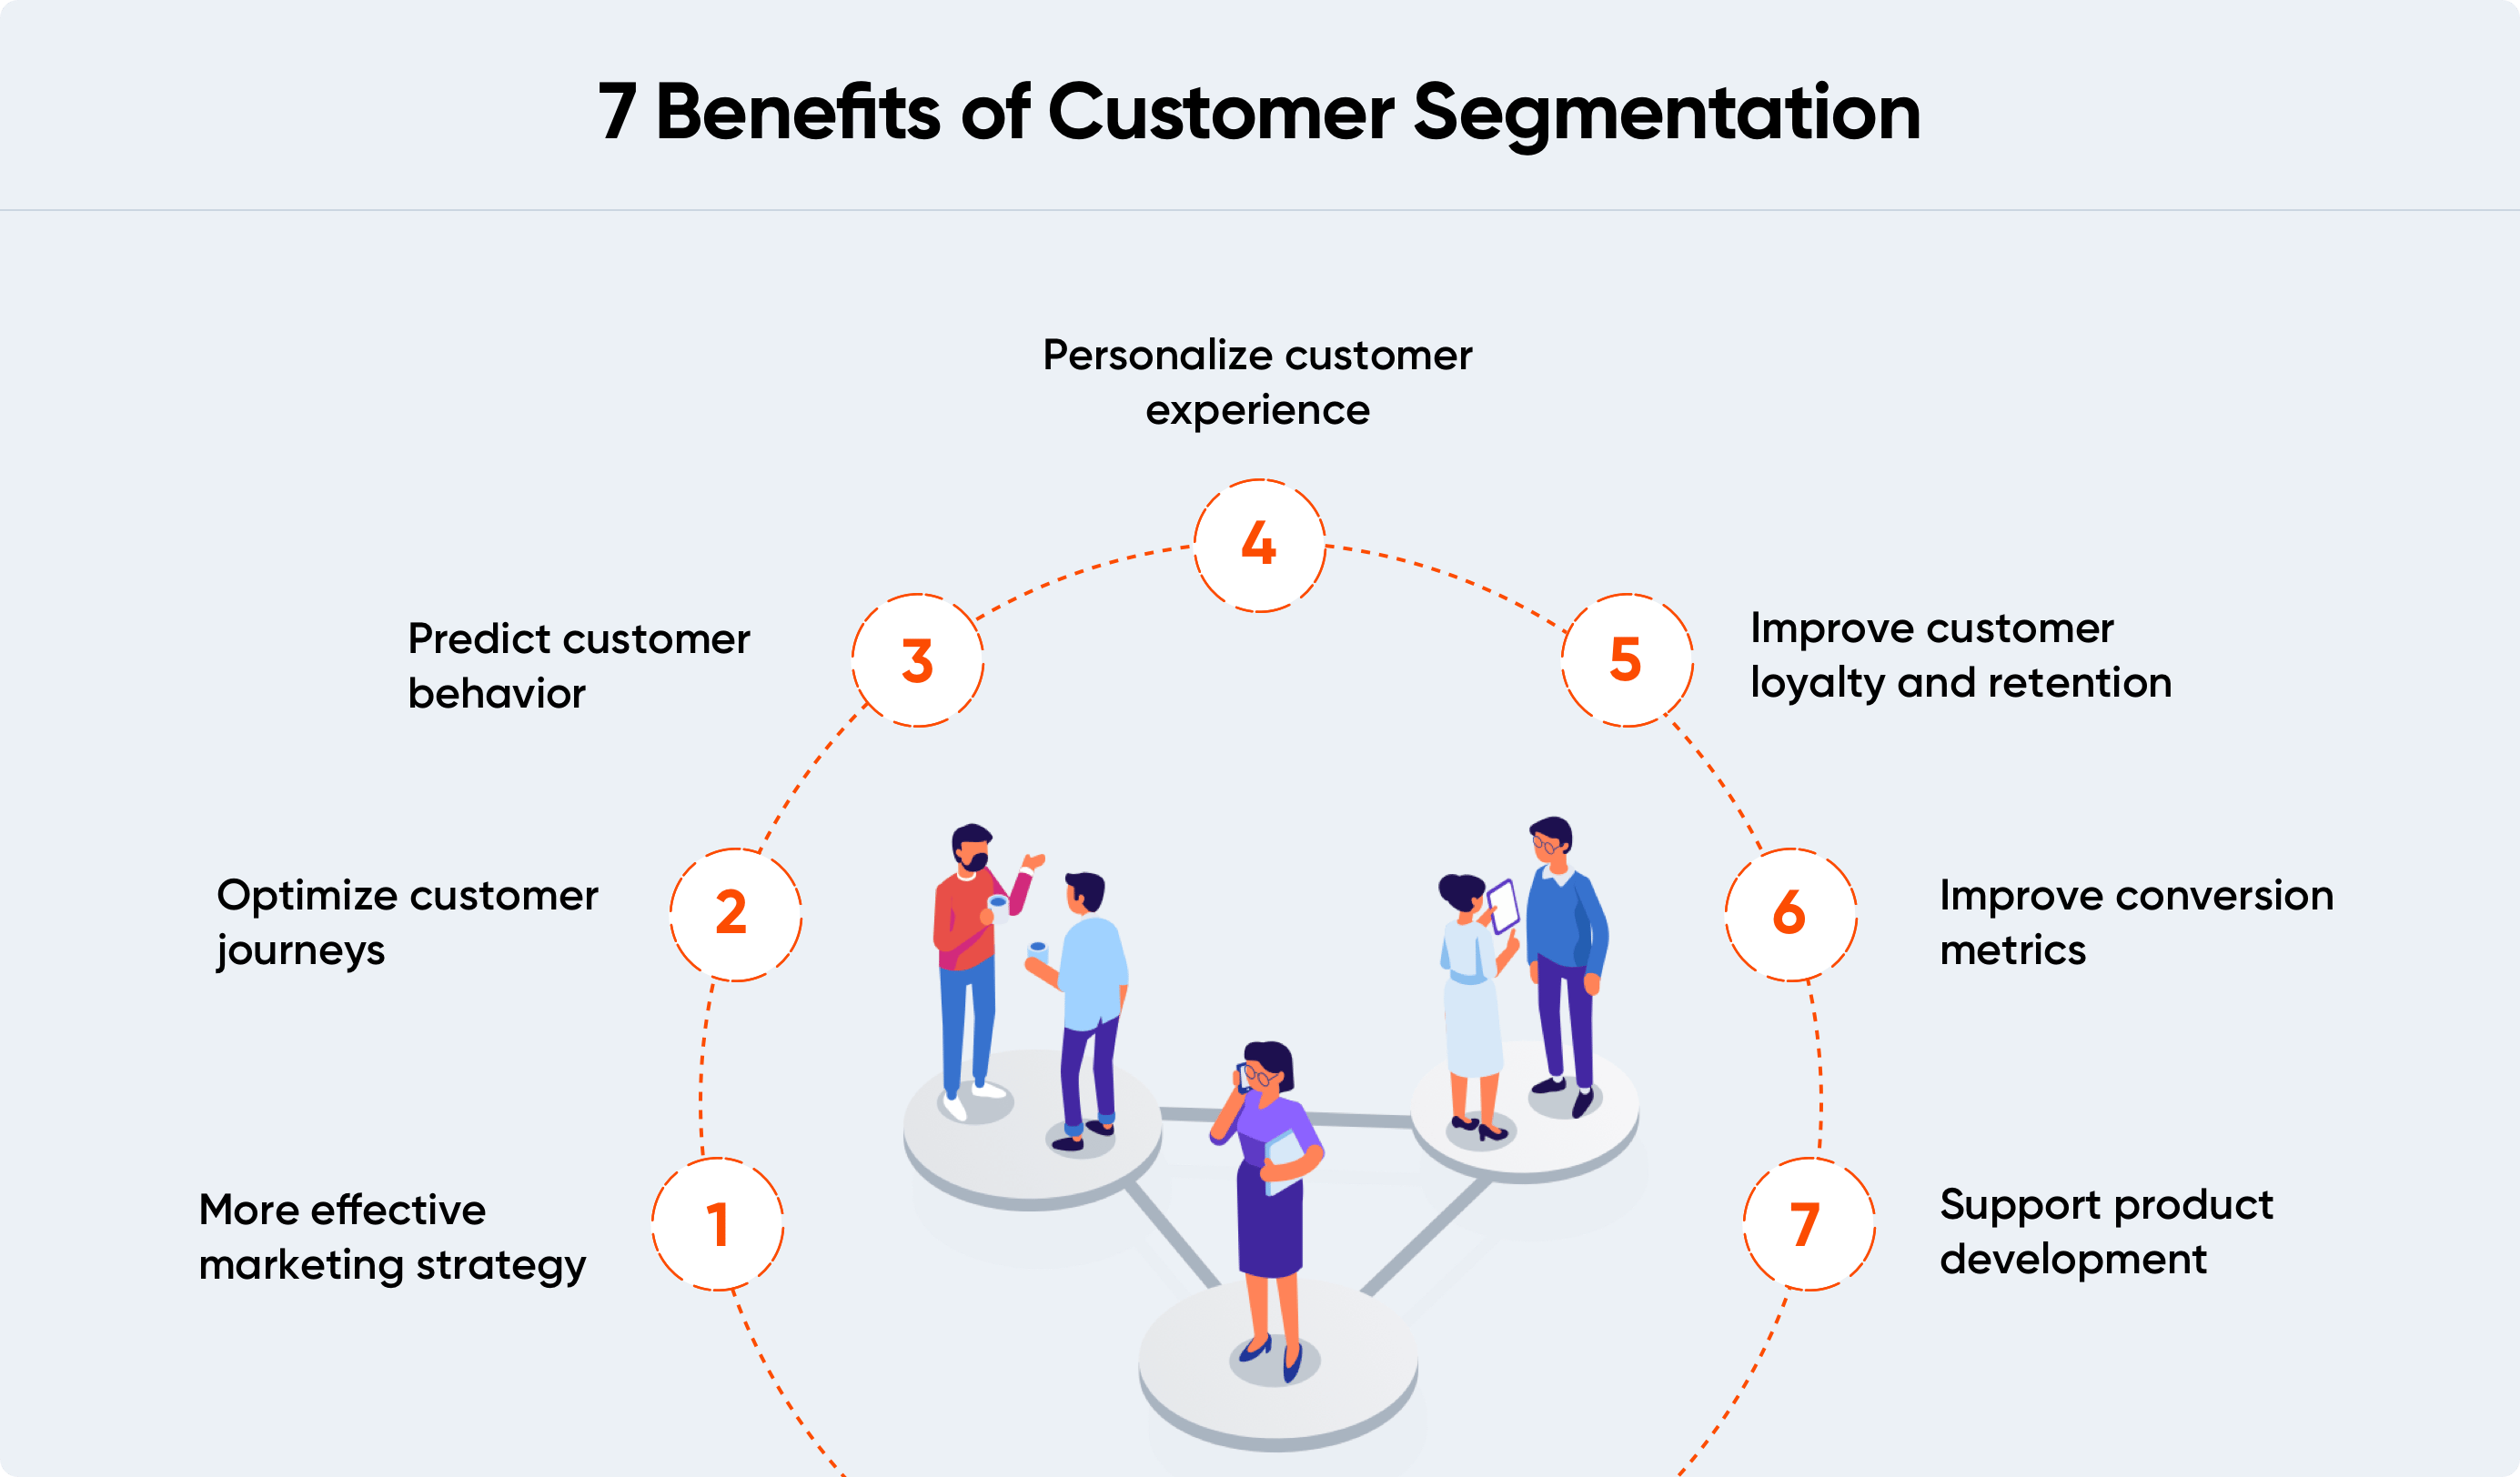 Benefits of customer segmentation